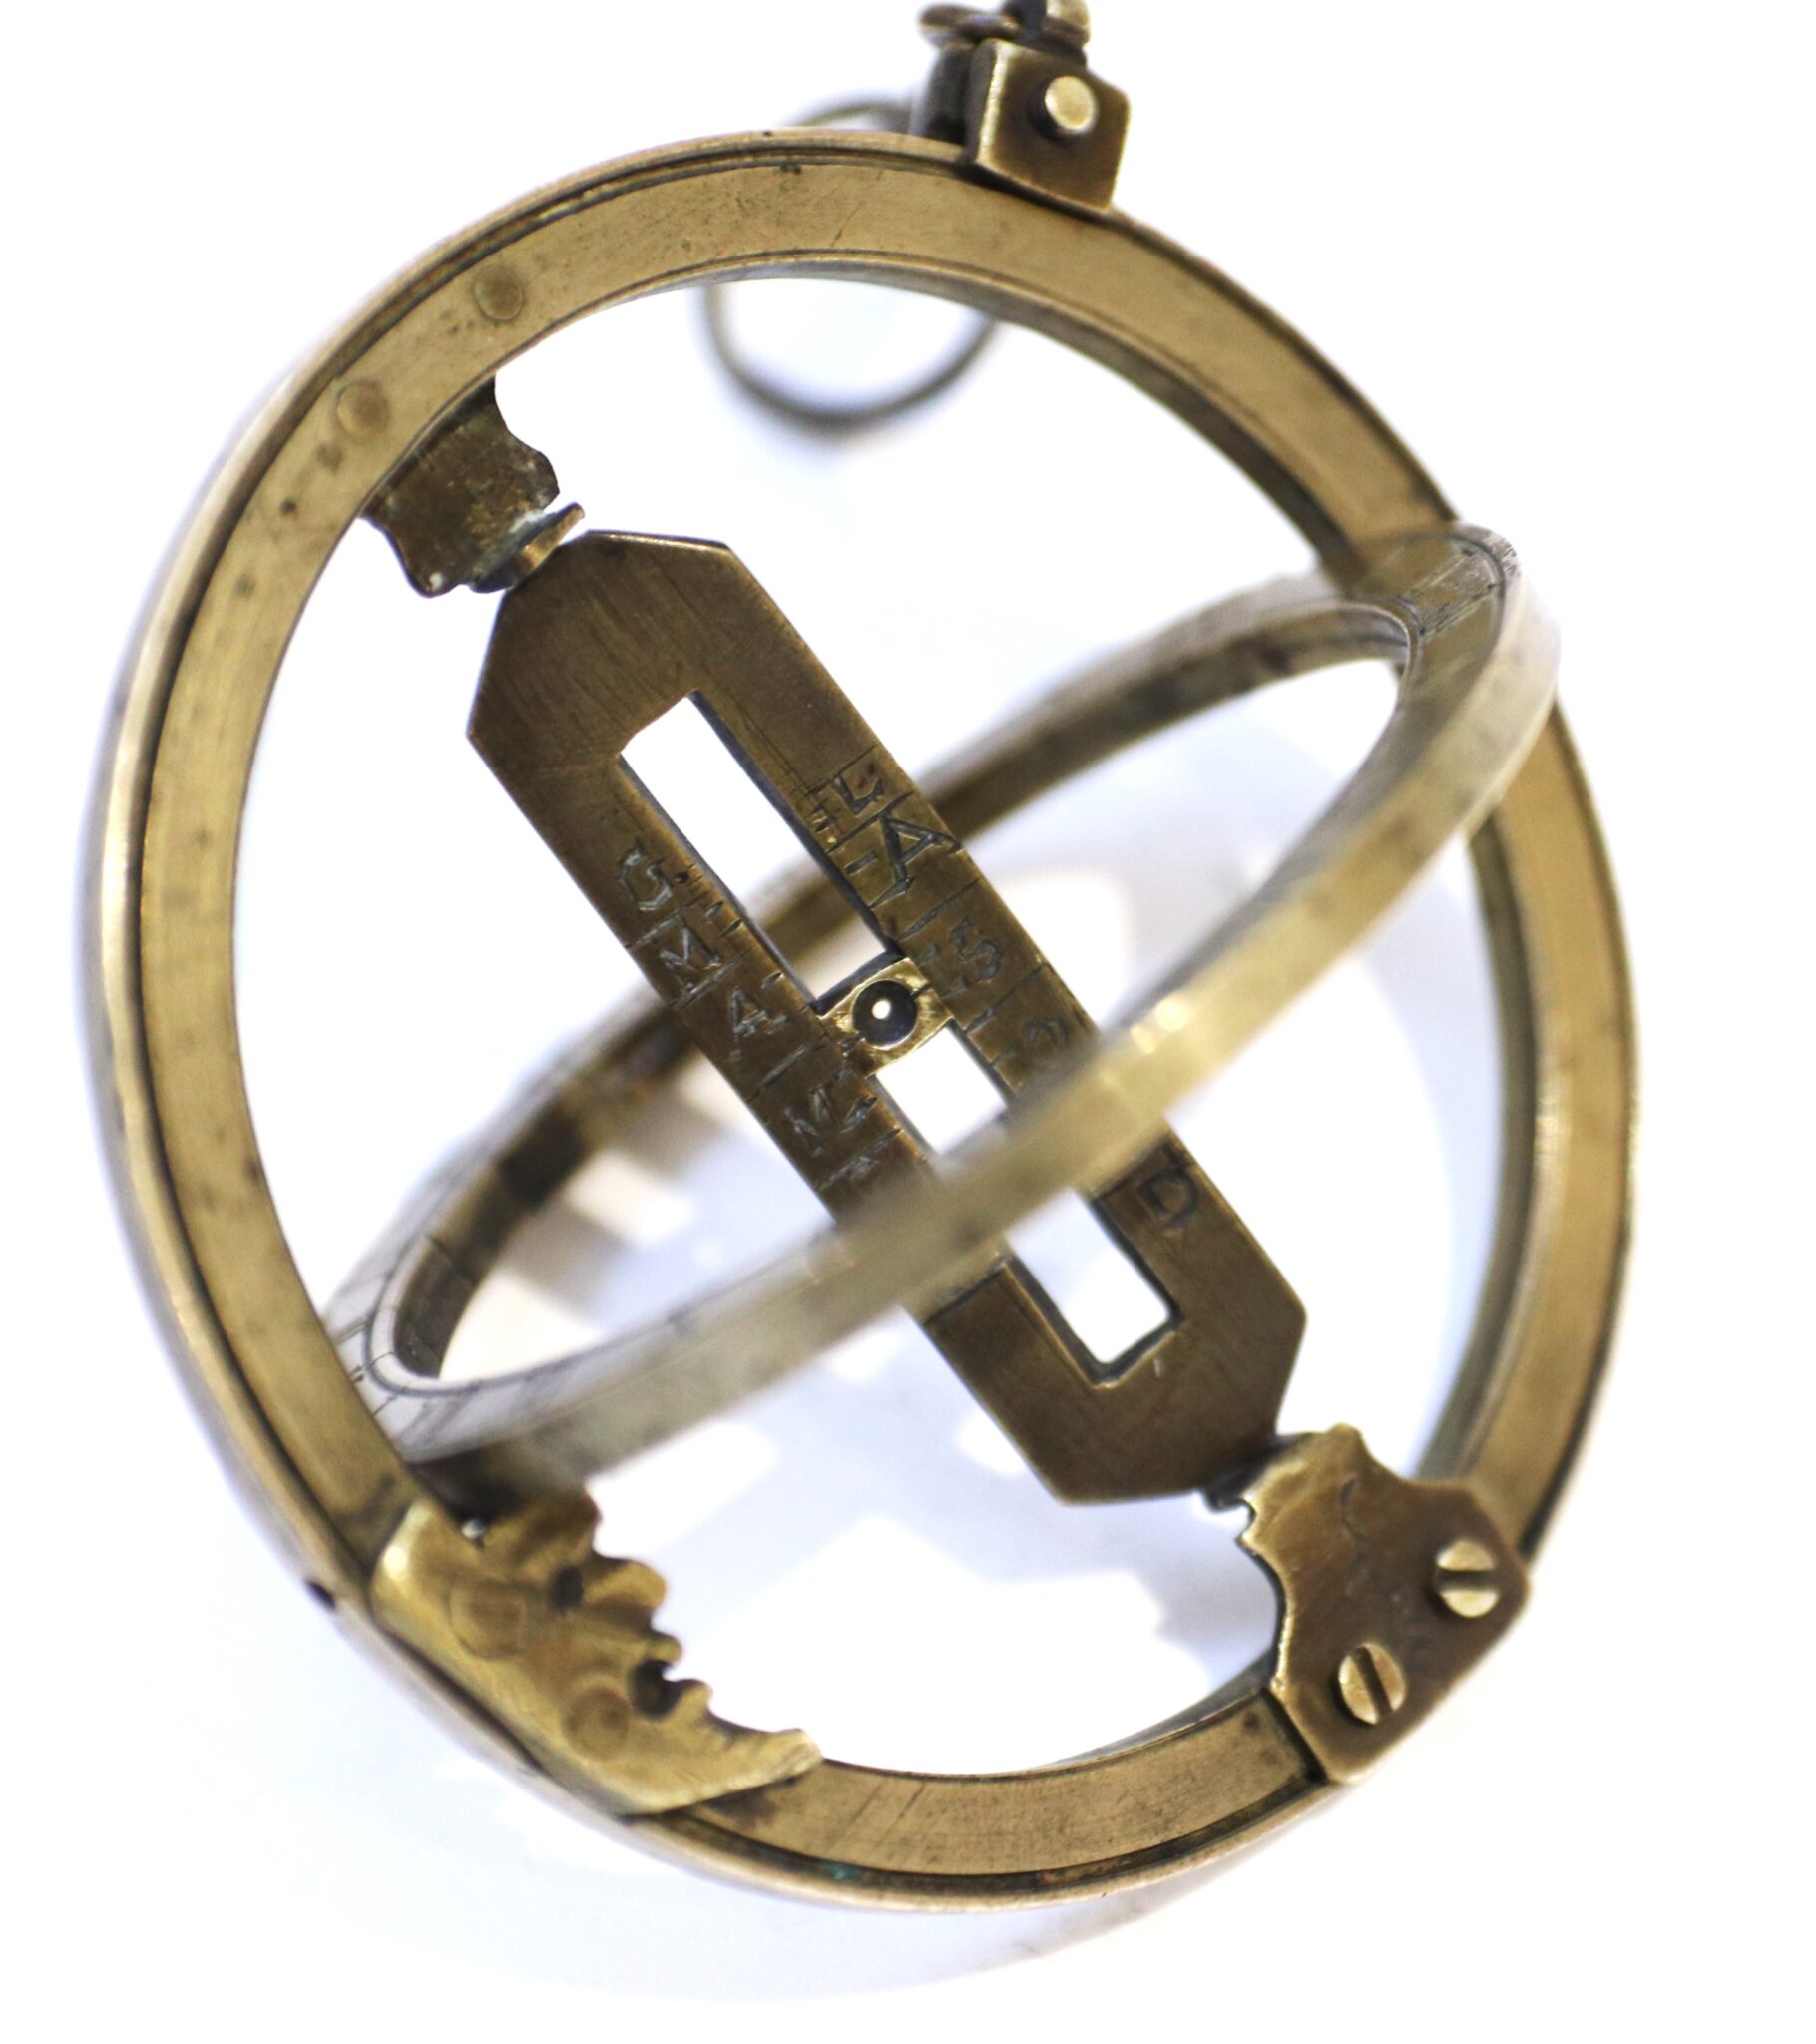 An Italian ring dial, late 18th century